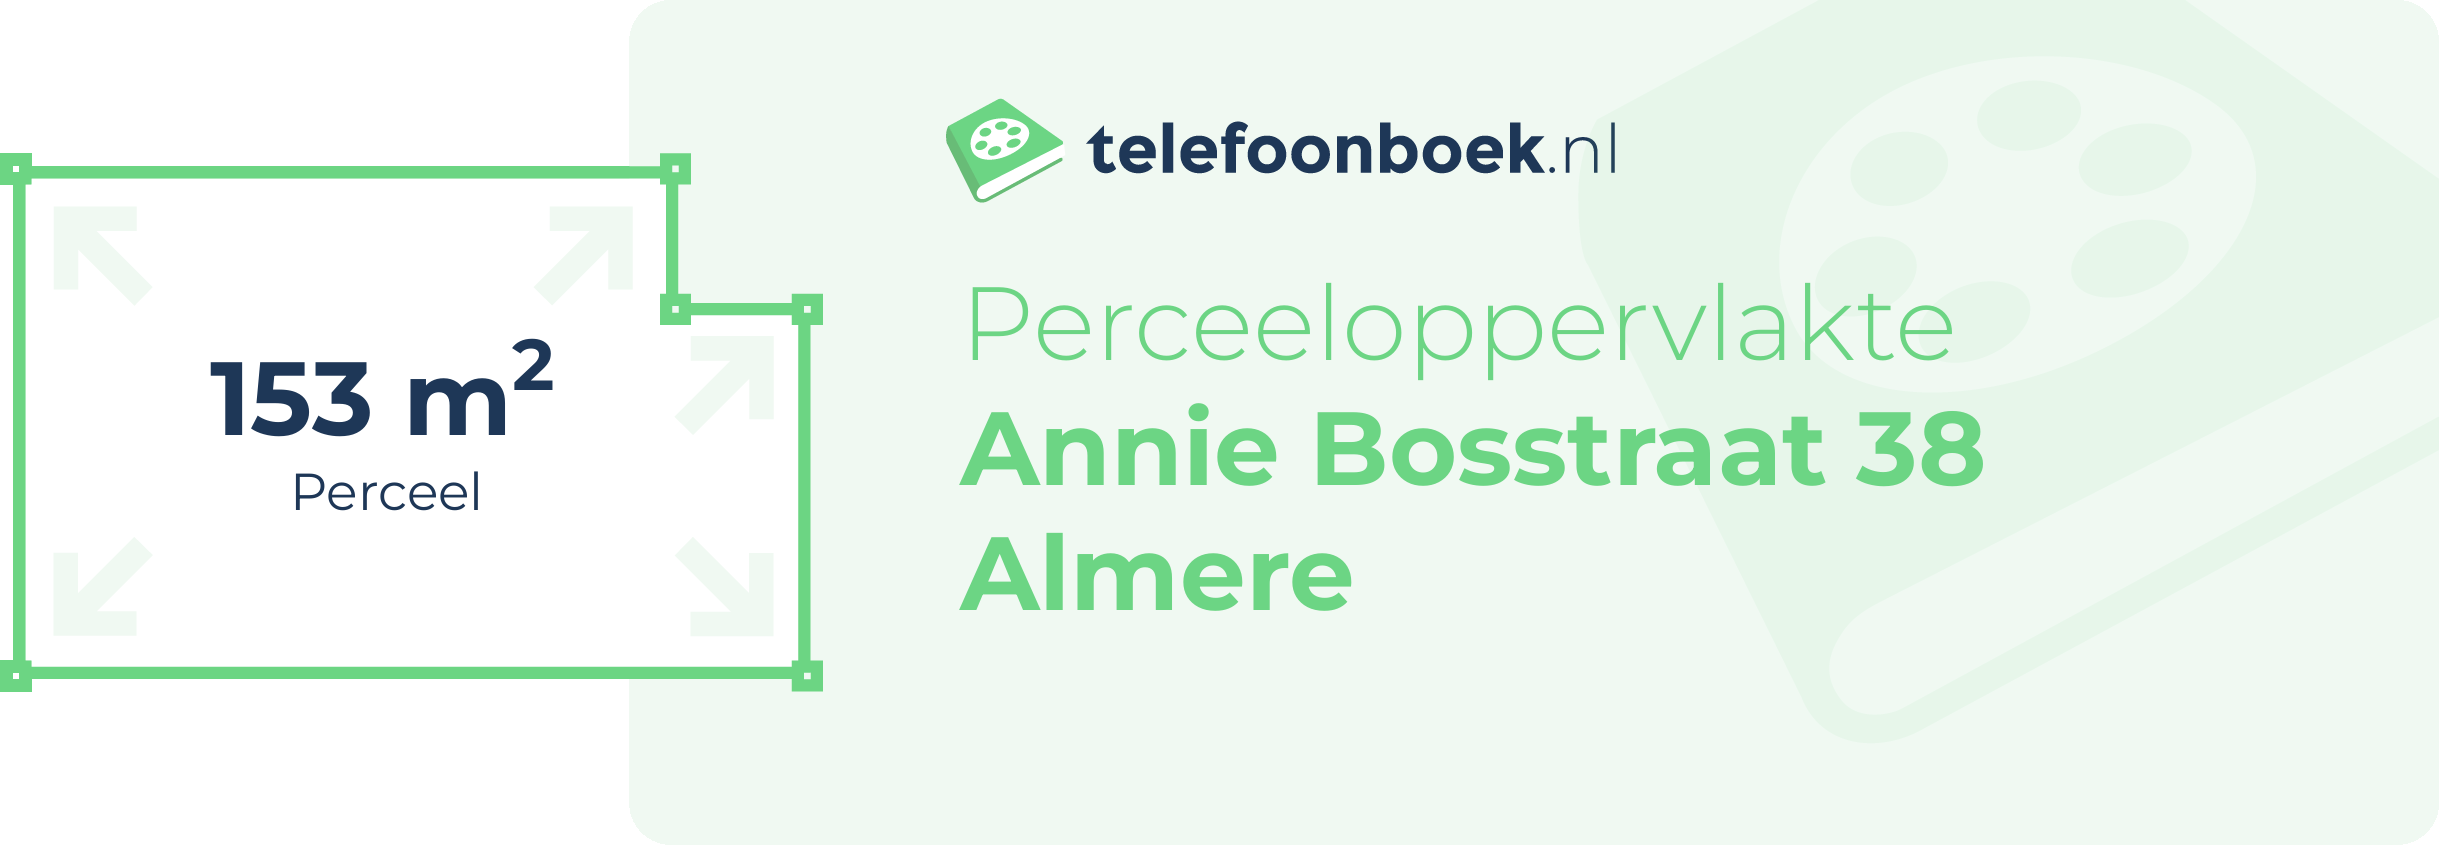 Perceeloppervlakte Annie Bosstraat 38 Almere